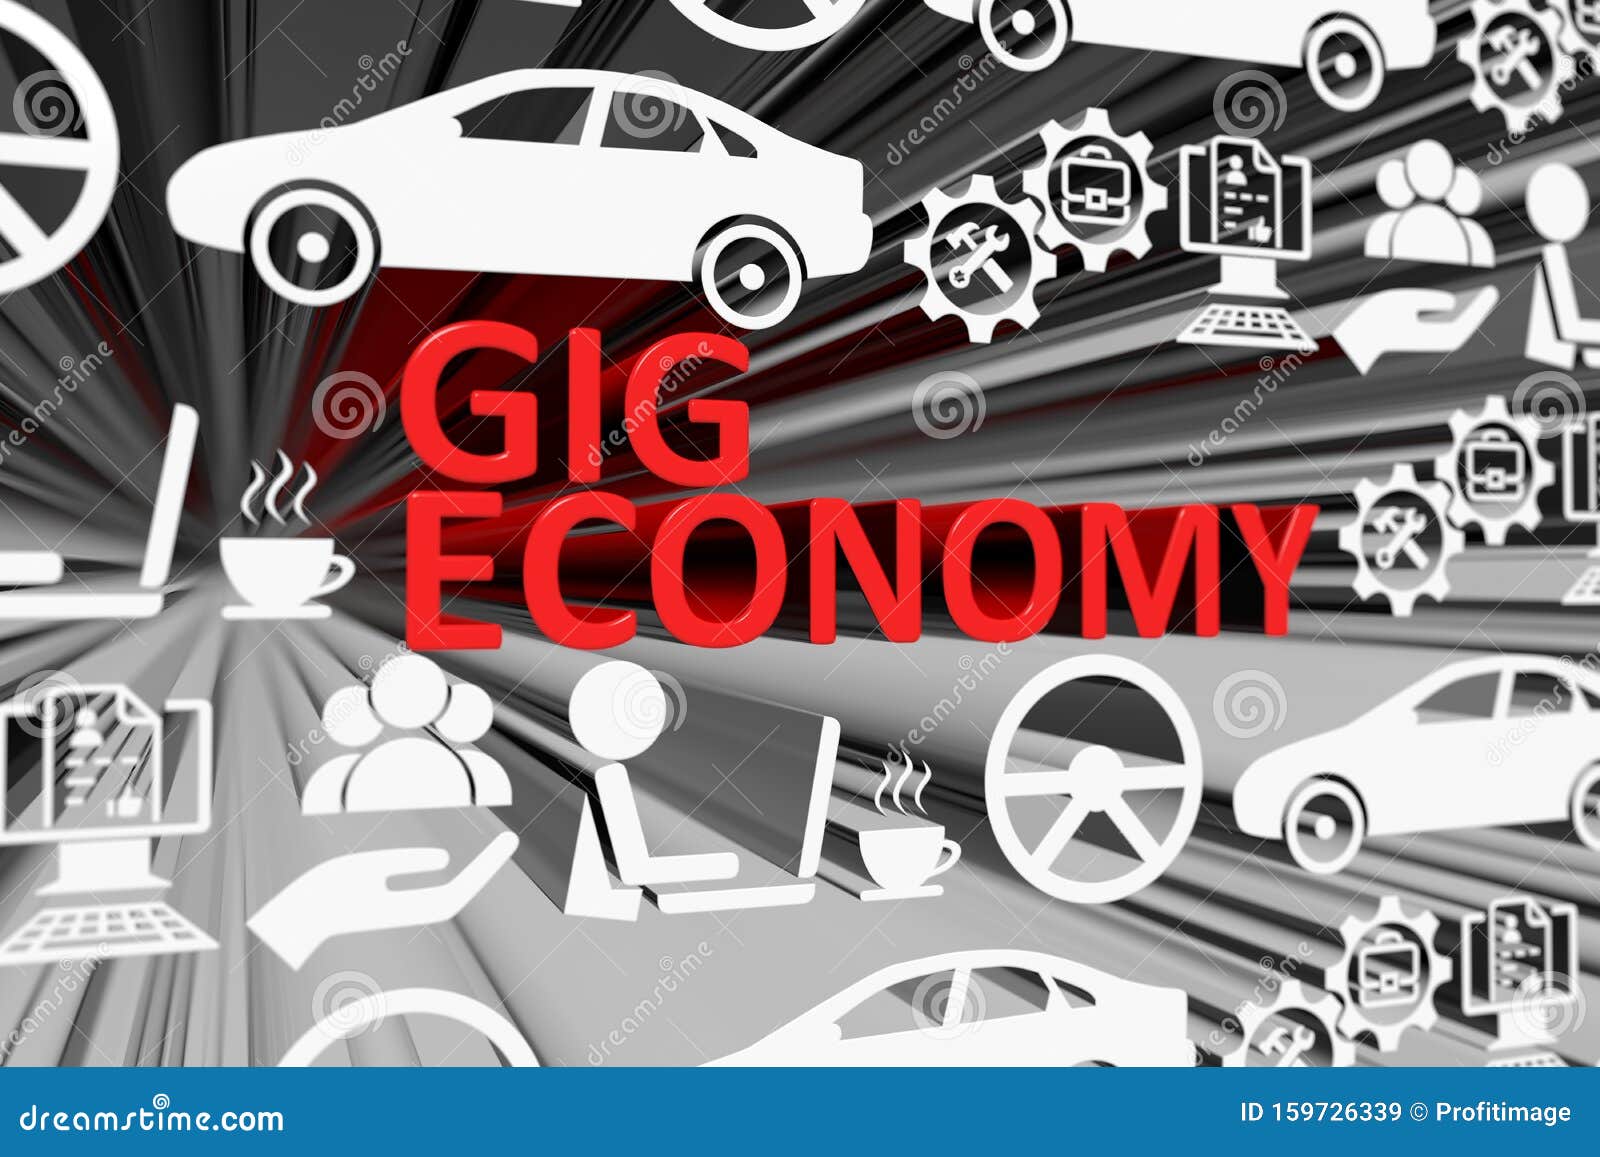 gig economy concept blurred background